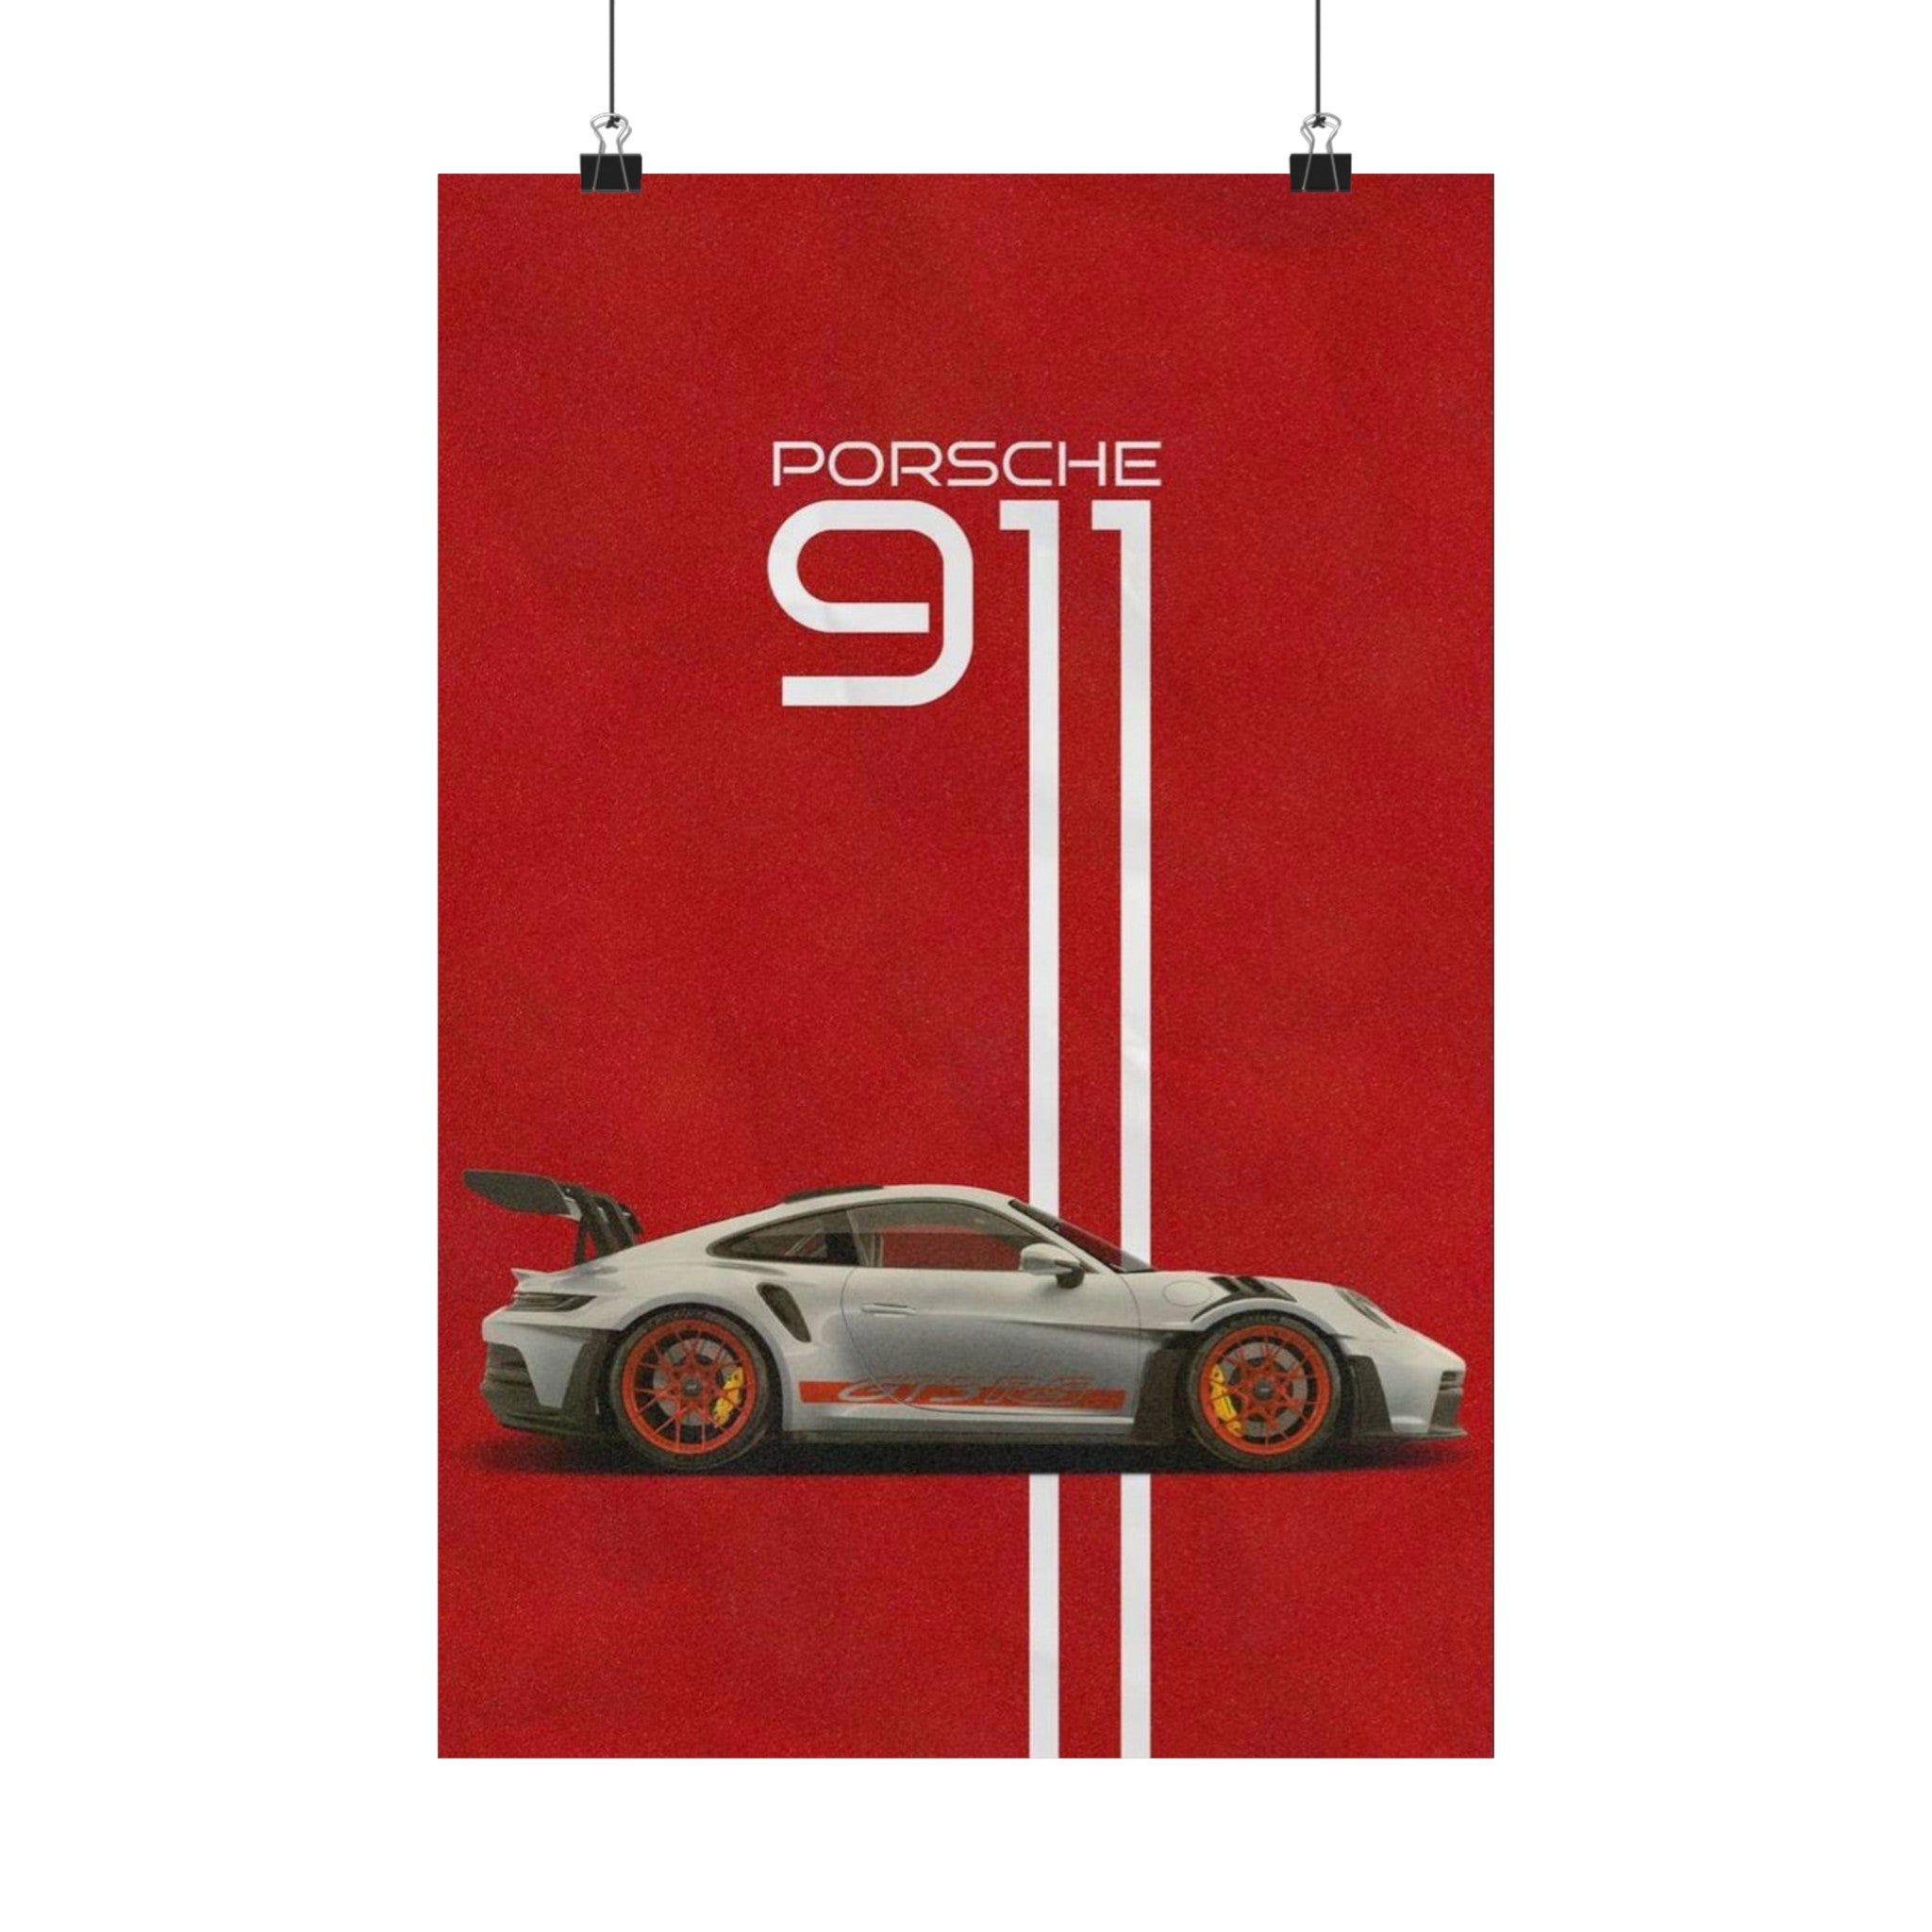 Modern Cool Cars Canvas Print Classic Racing Artwork, Supercar Wall Art, Sports Car Poster, Home Decor, Gift Idea